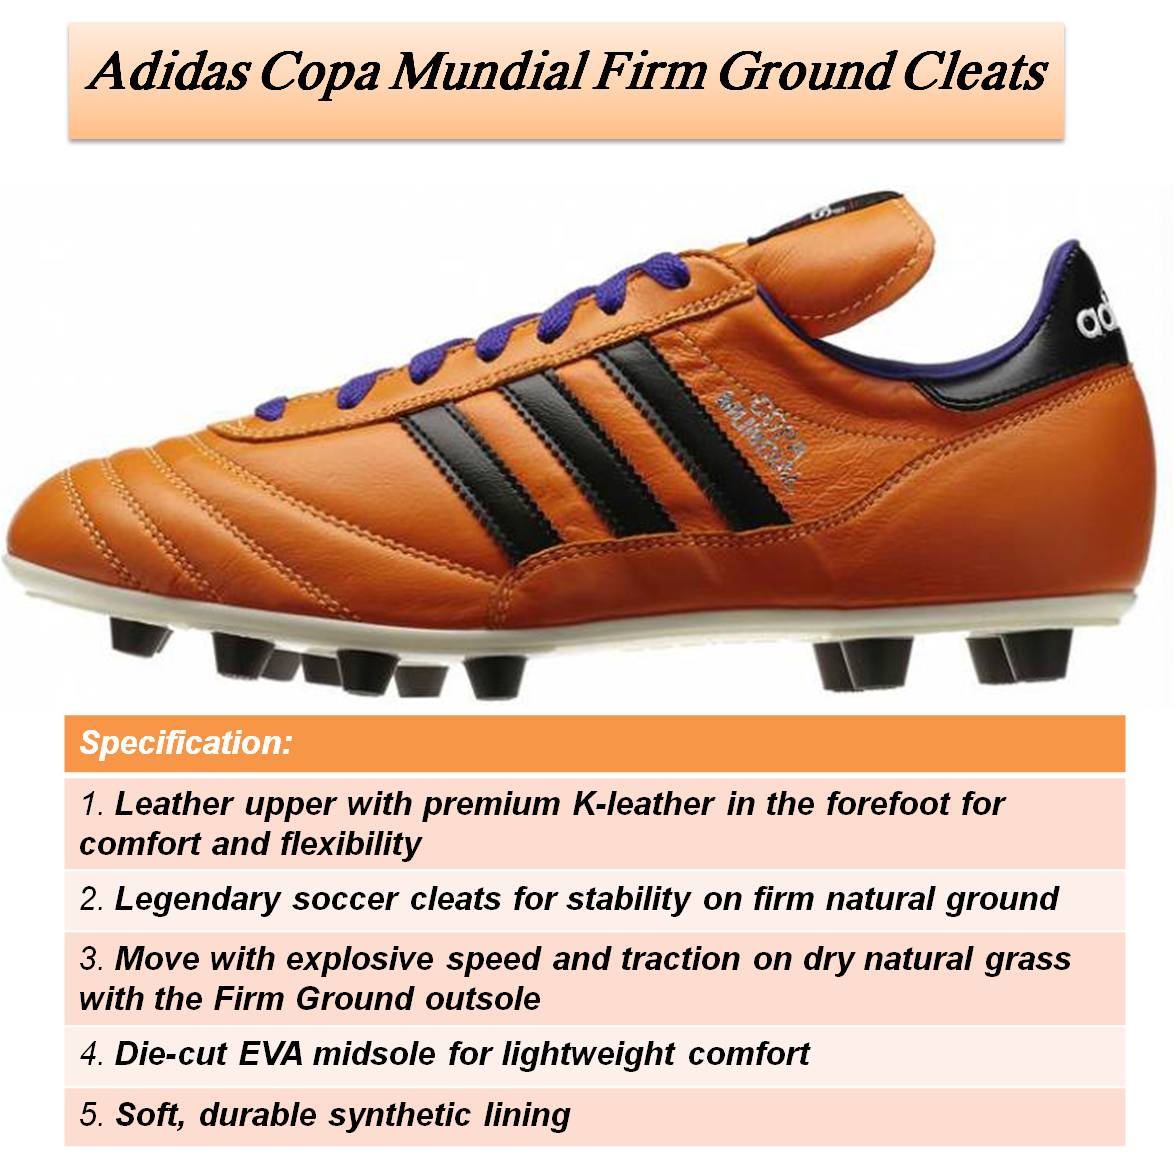 Adidas_Copa_Mundial_Firm_Ground_Cleats_Khelmart